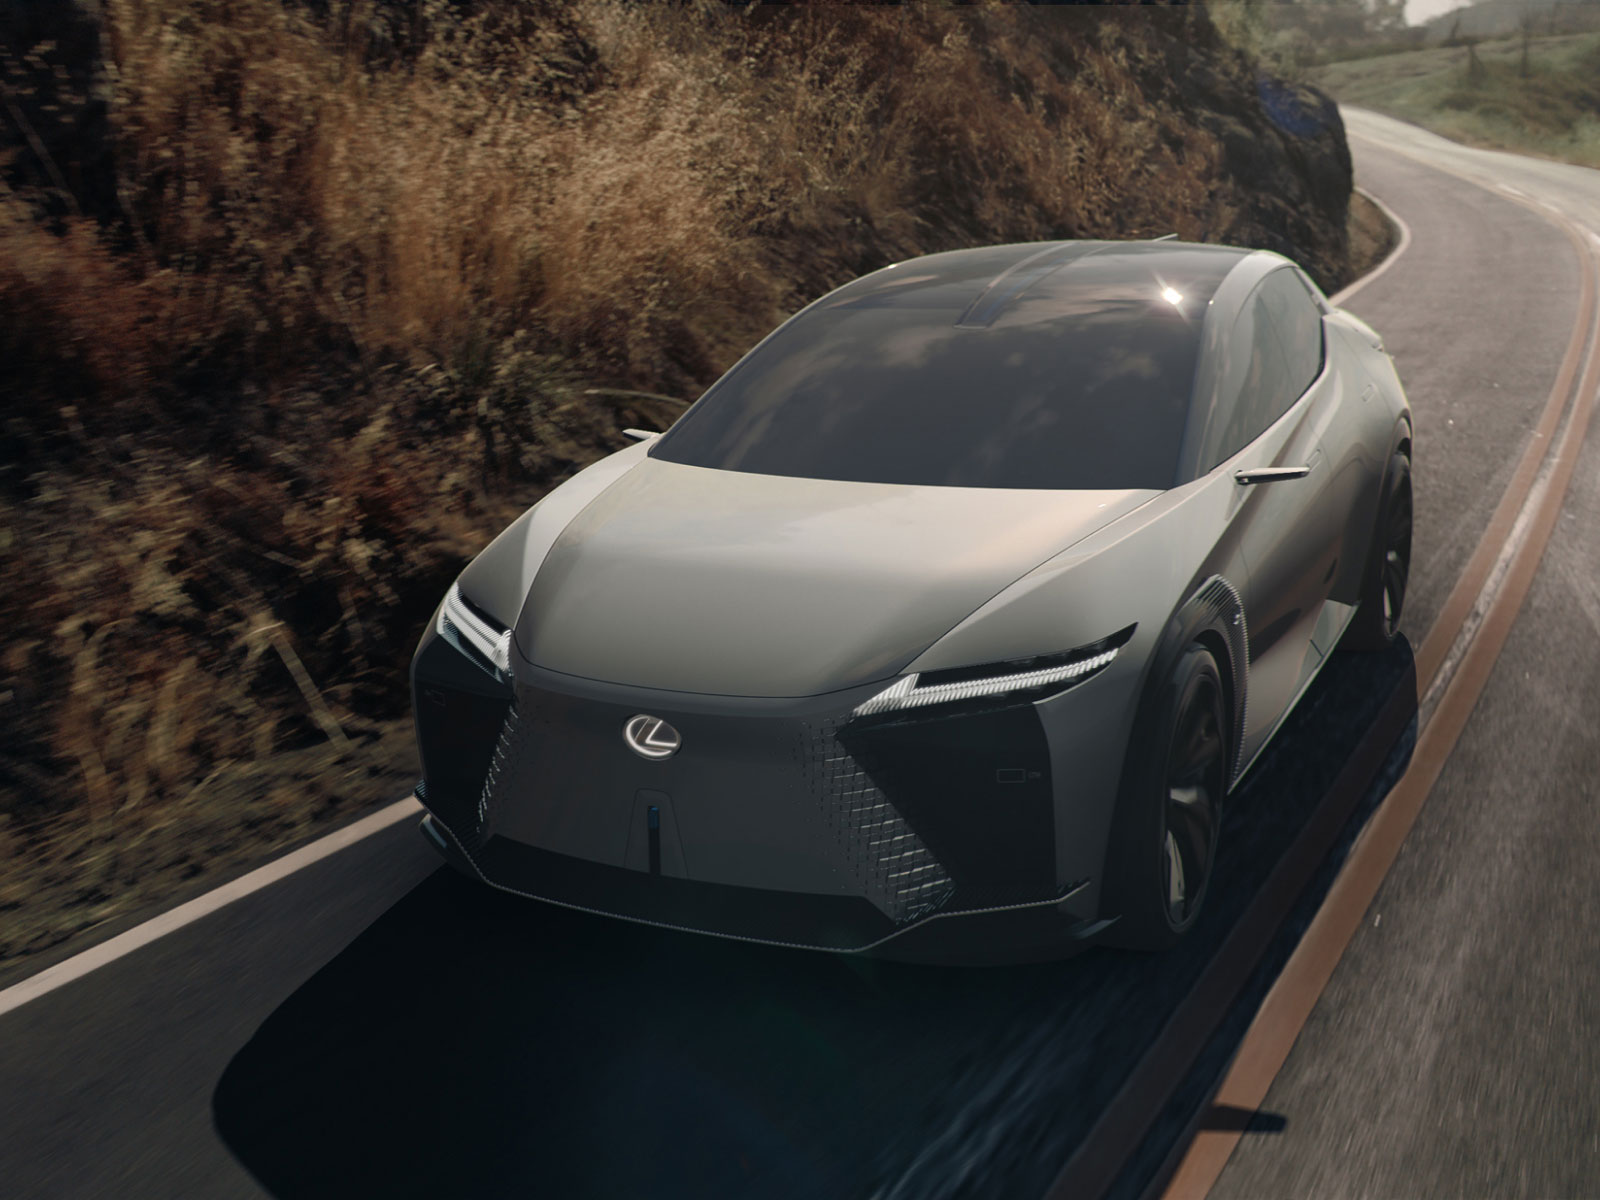 The Lexus LF-Z Electrified Concept Car